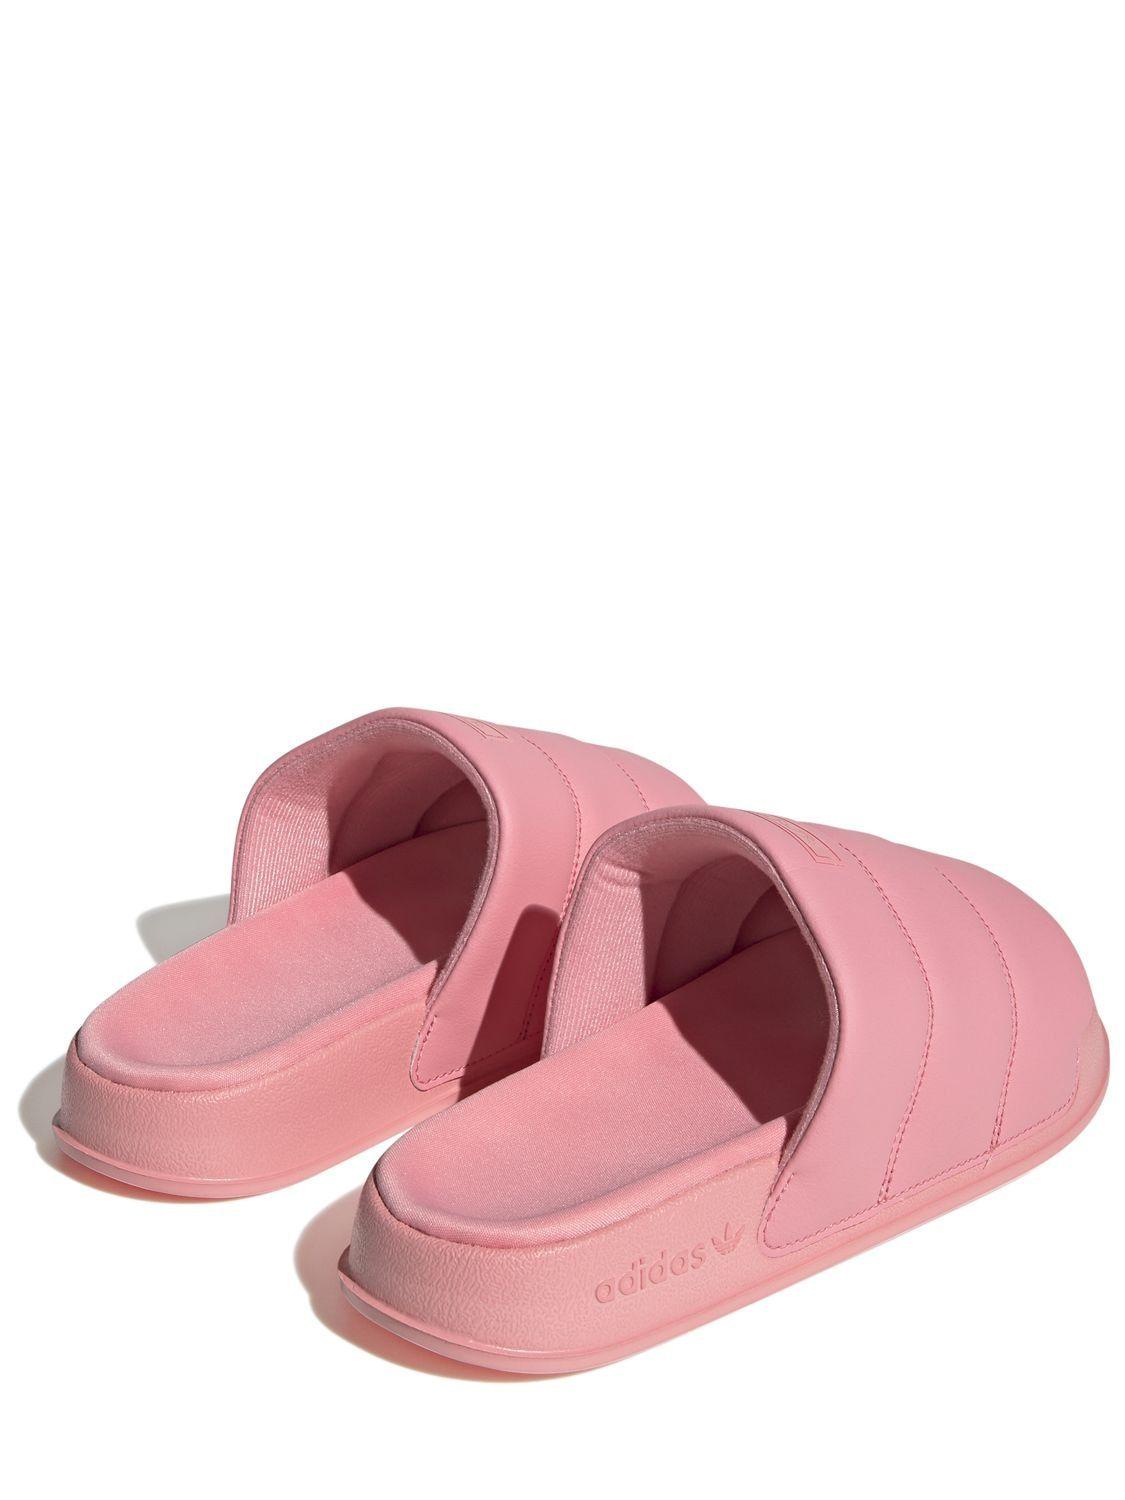 adidas Originals Adilette Slide Sandals in Pink | Lyst